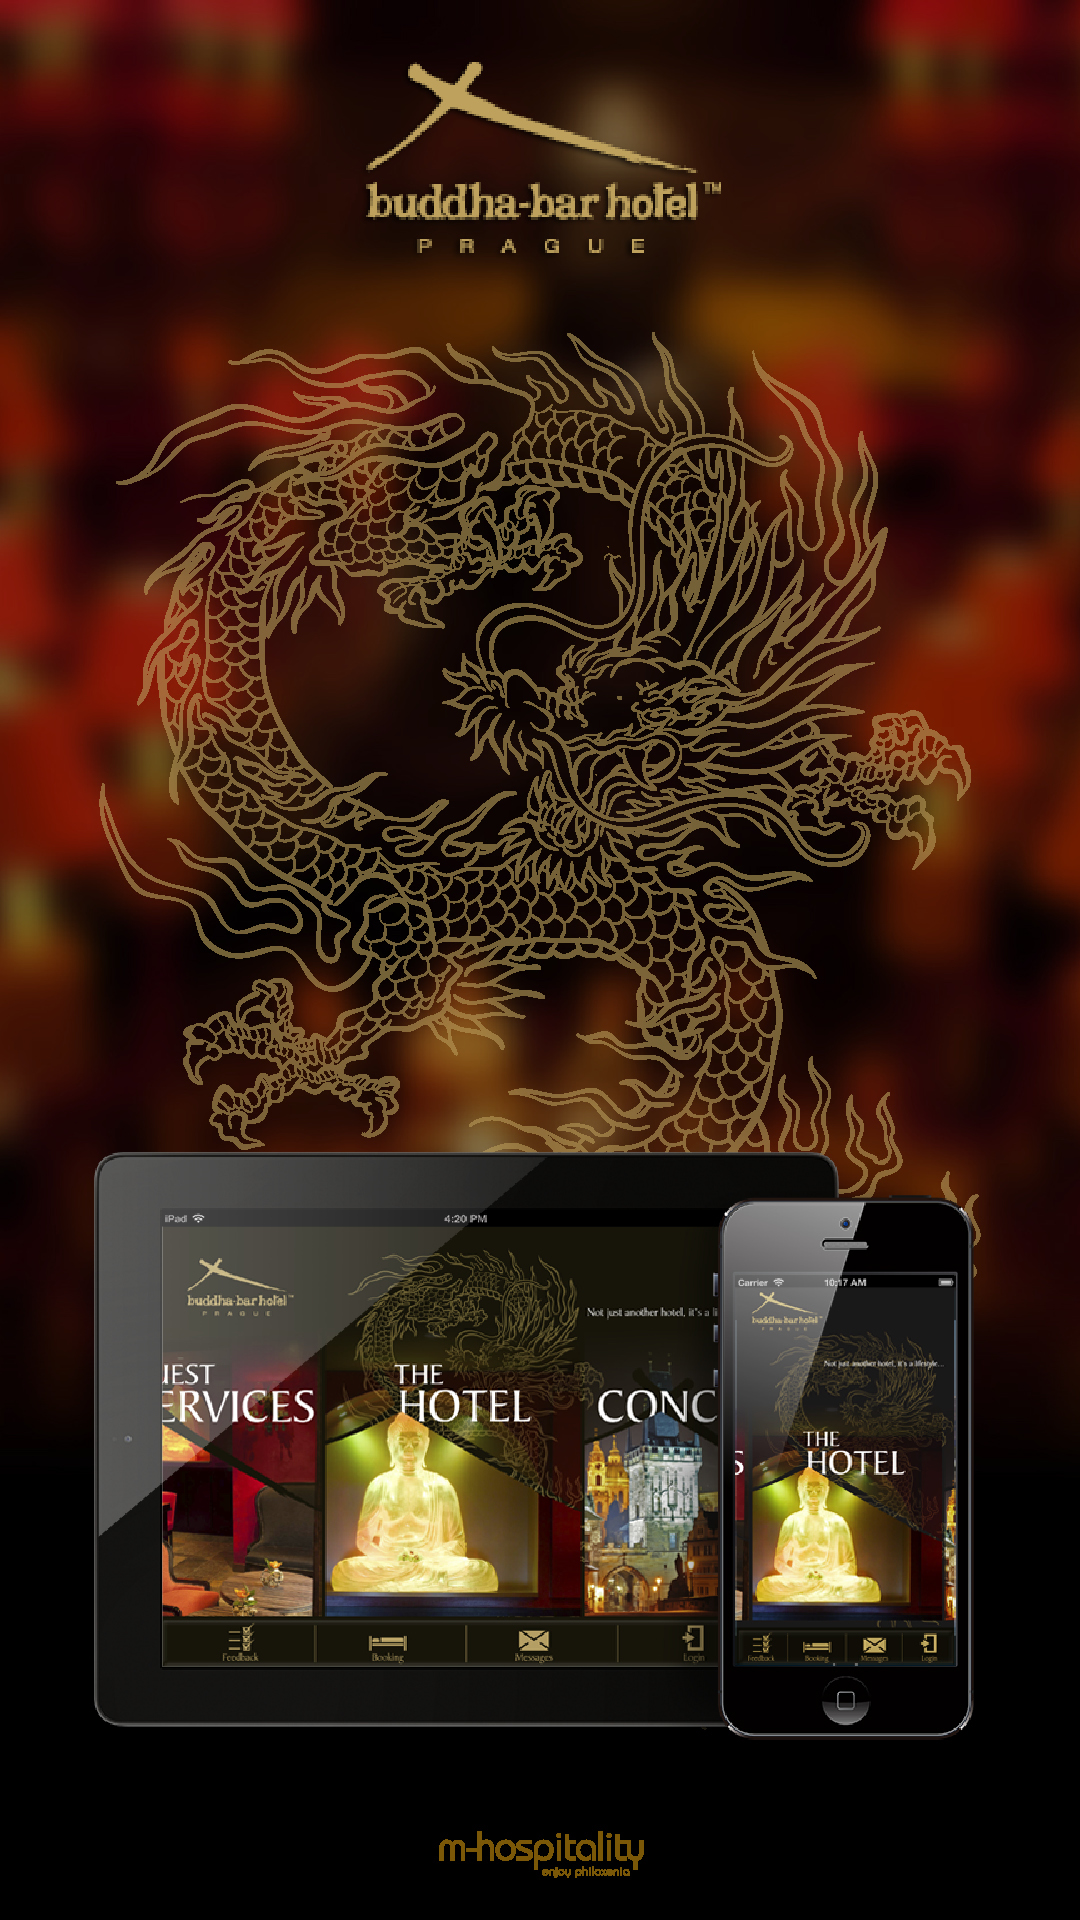 buddha-bar hotel prague iphone iPad tablet application app smartphone traveling tourism